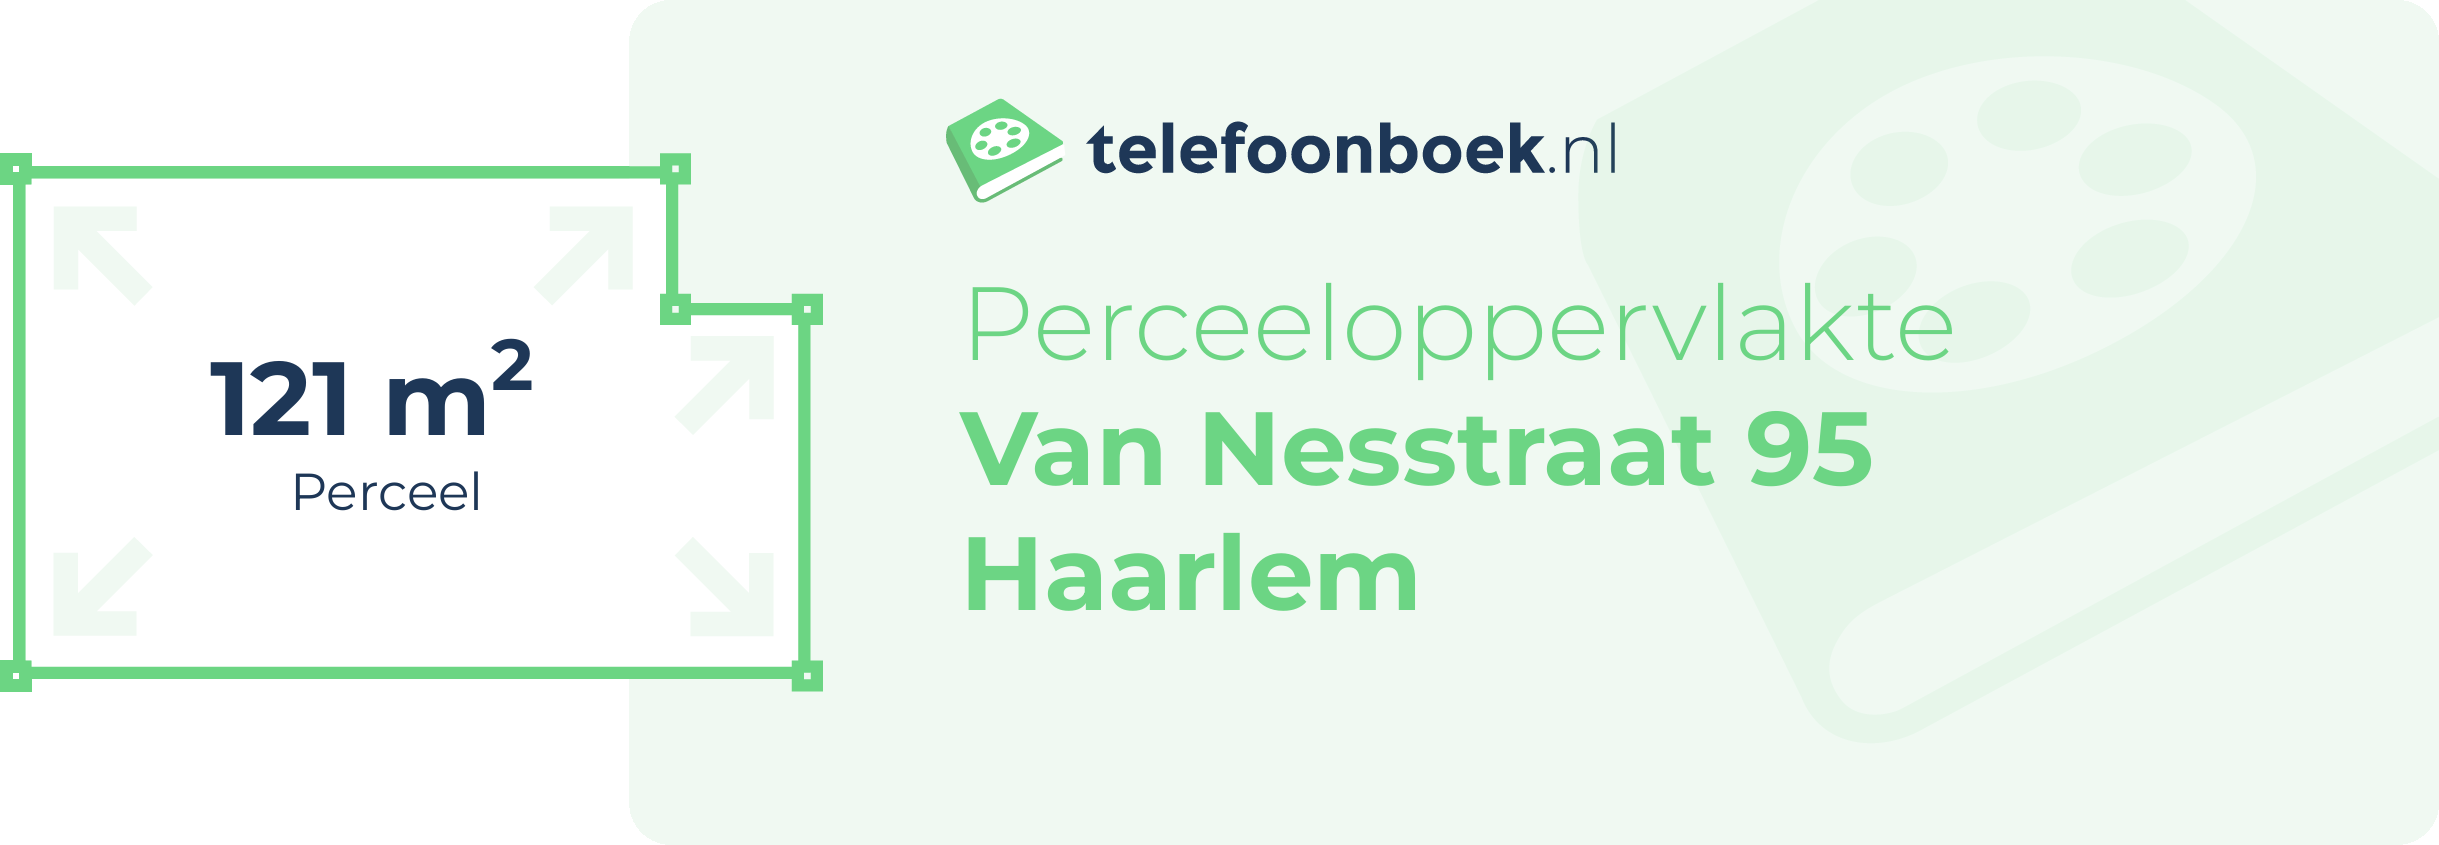 Perceeloppervlakte Van Nesstraat 95 Haarlem